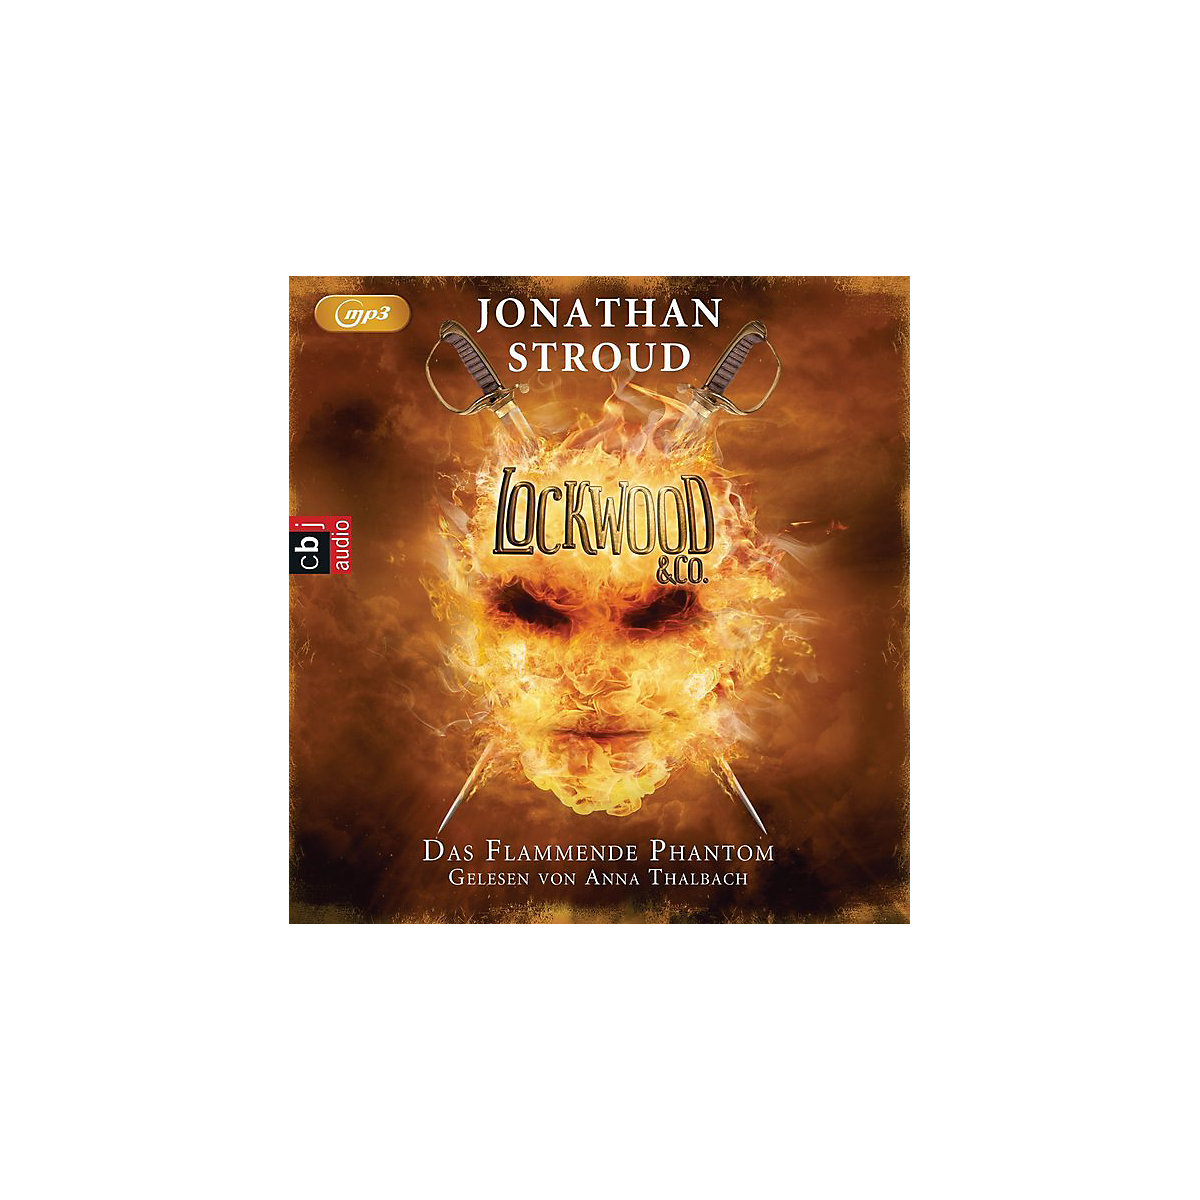 Lockwood & Co.: Das Flammende Phantom 2 MP3-CDs